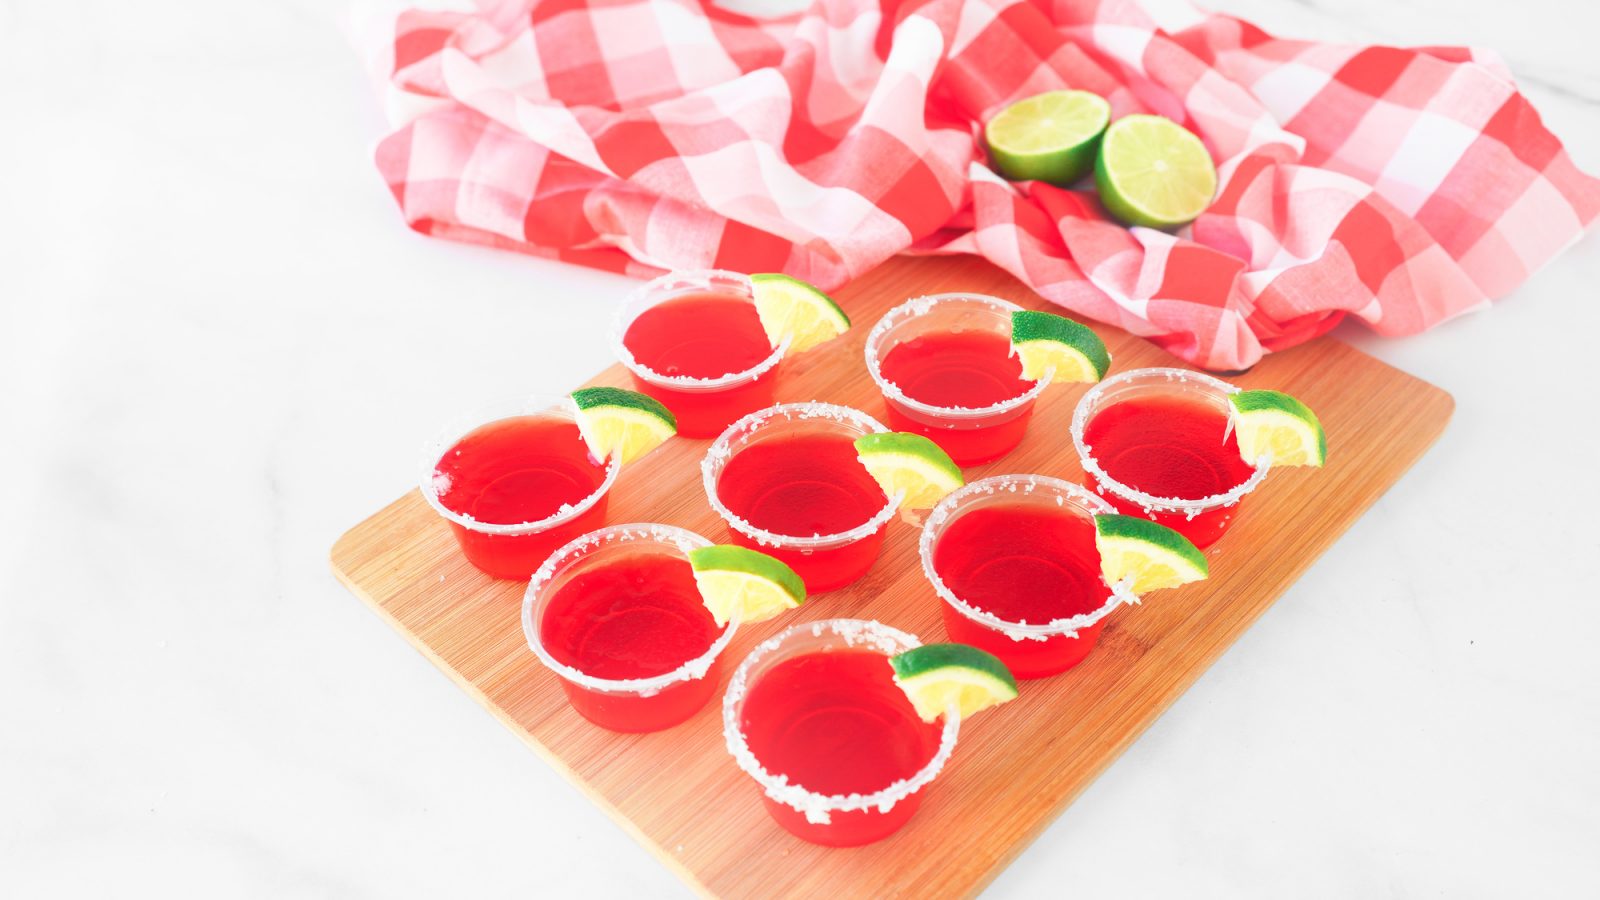 strawberry margarita vegan jello shots on tray with limes